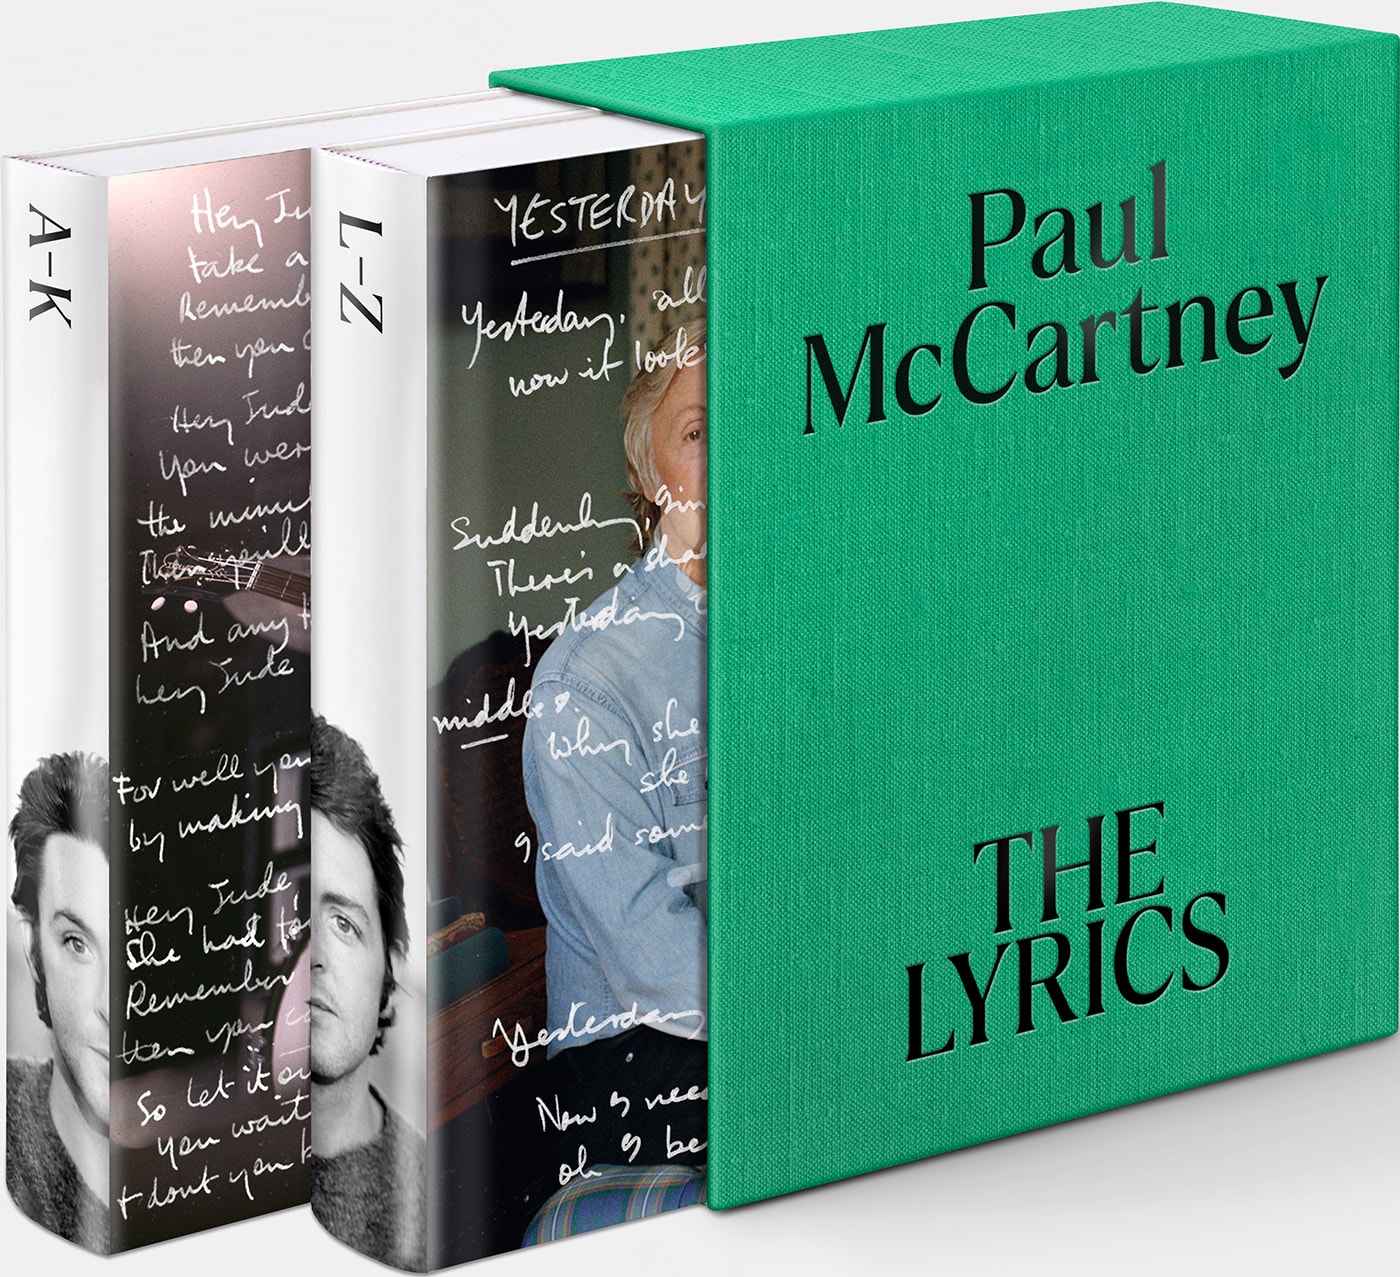 Zweibändiges Buch in Box PAUL McCARTNEY - THE LYRICS - 1956 TO THE PRESENT  - Beatles Museum